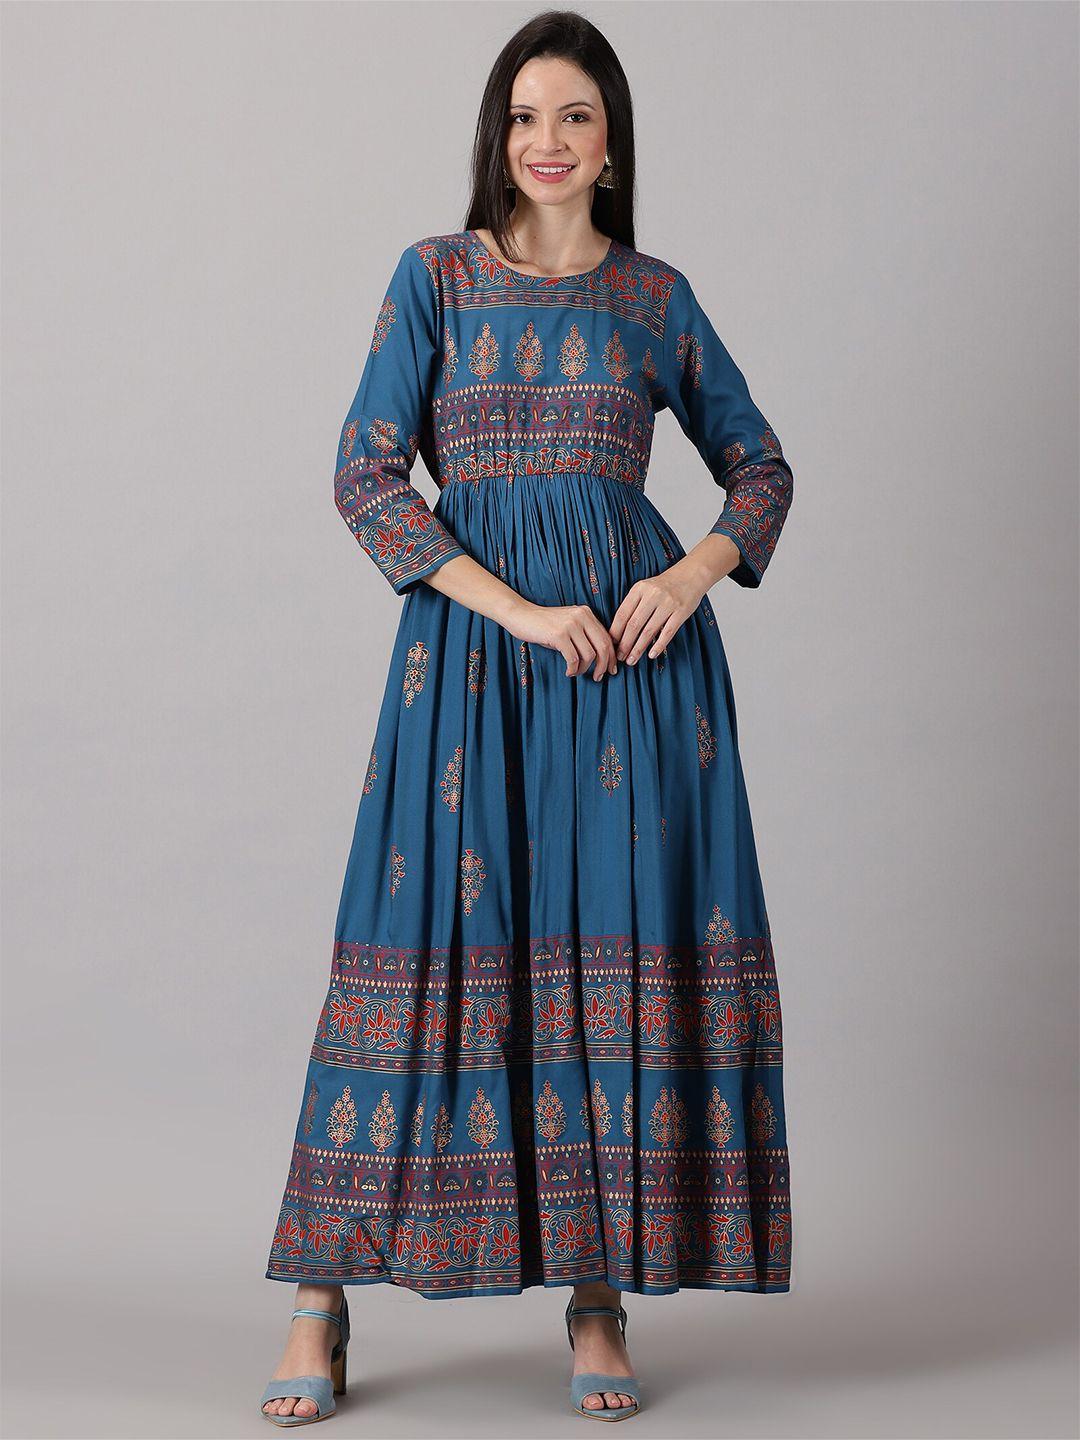 purshottam wala ethnic motifs printed fit & flare maxi ethnic dress